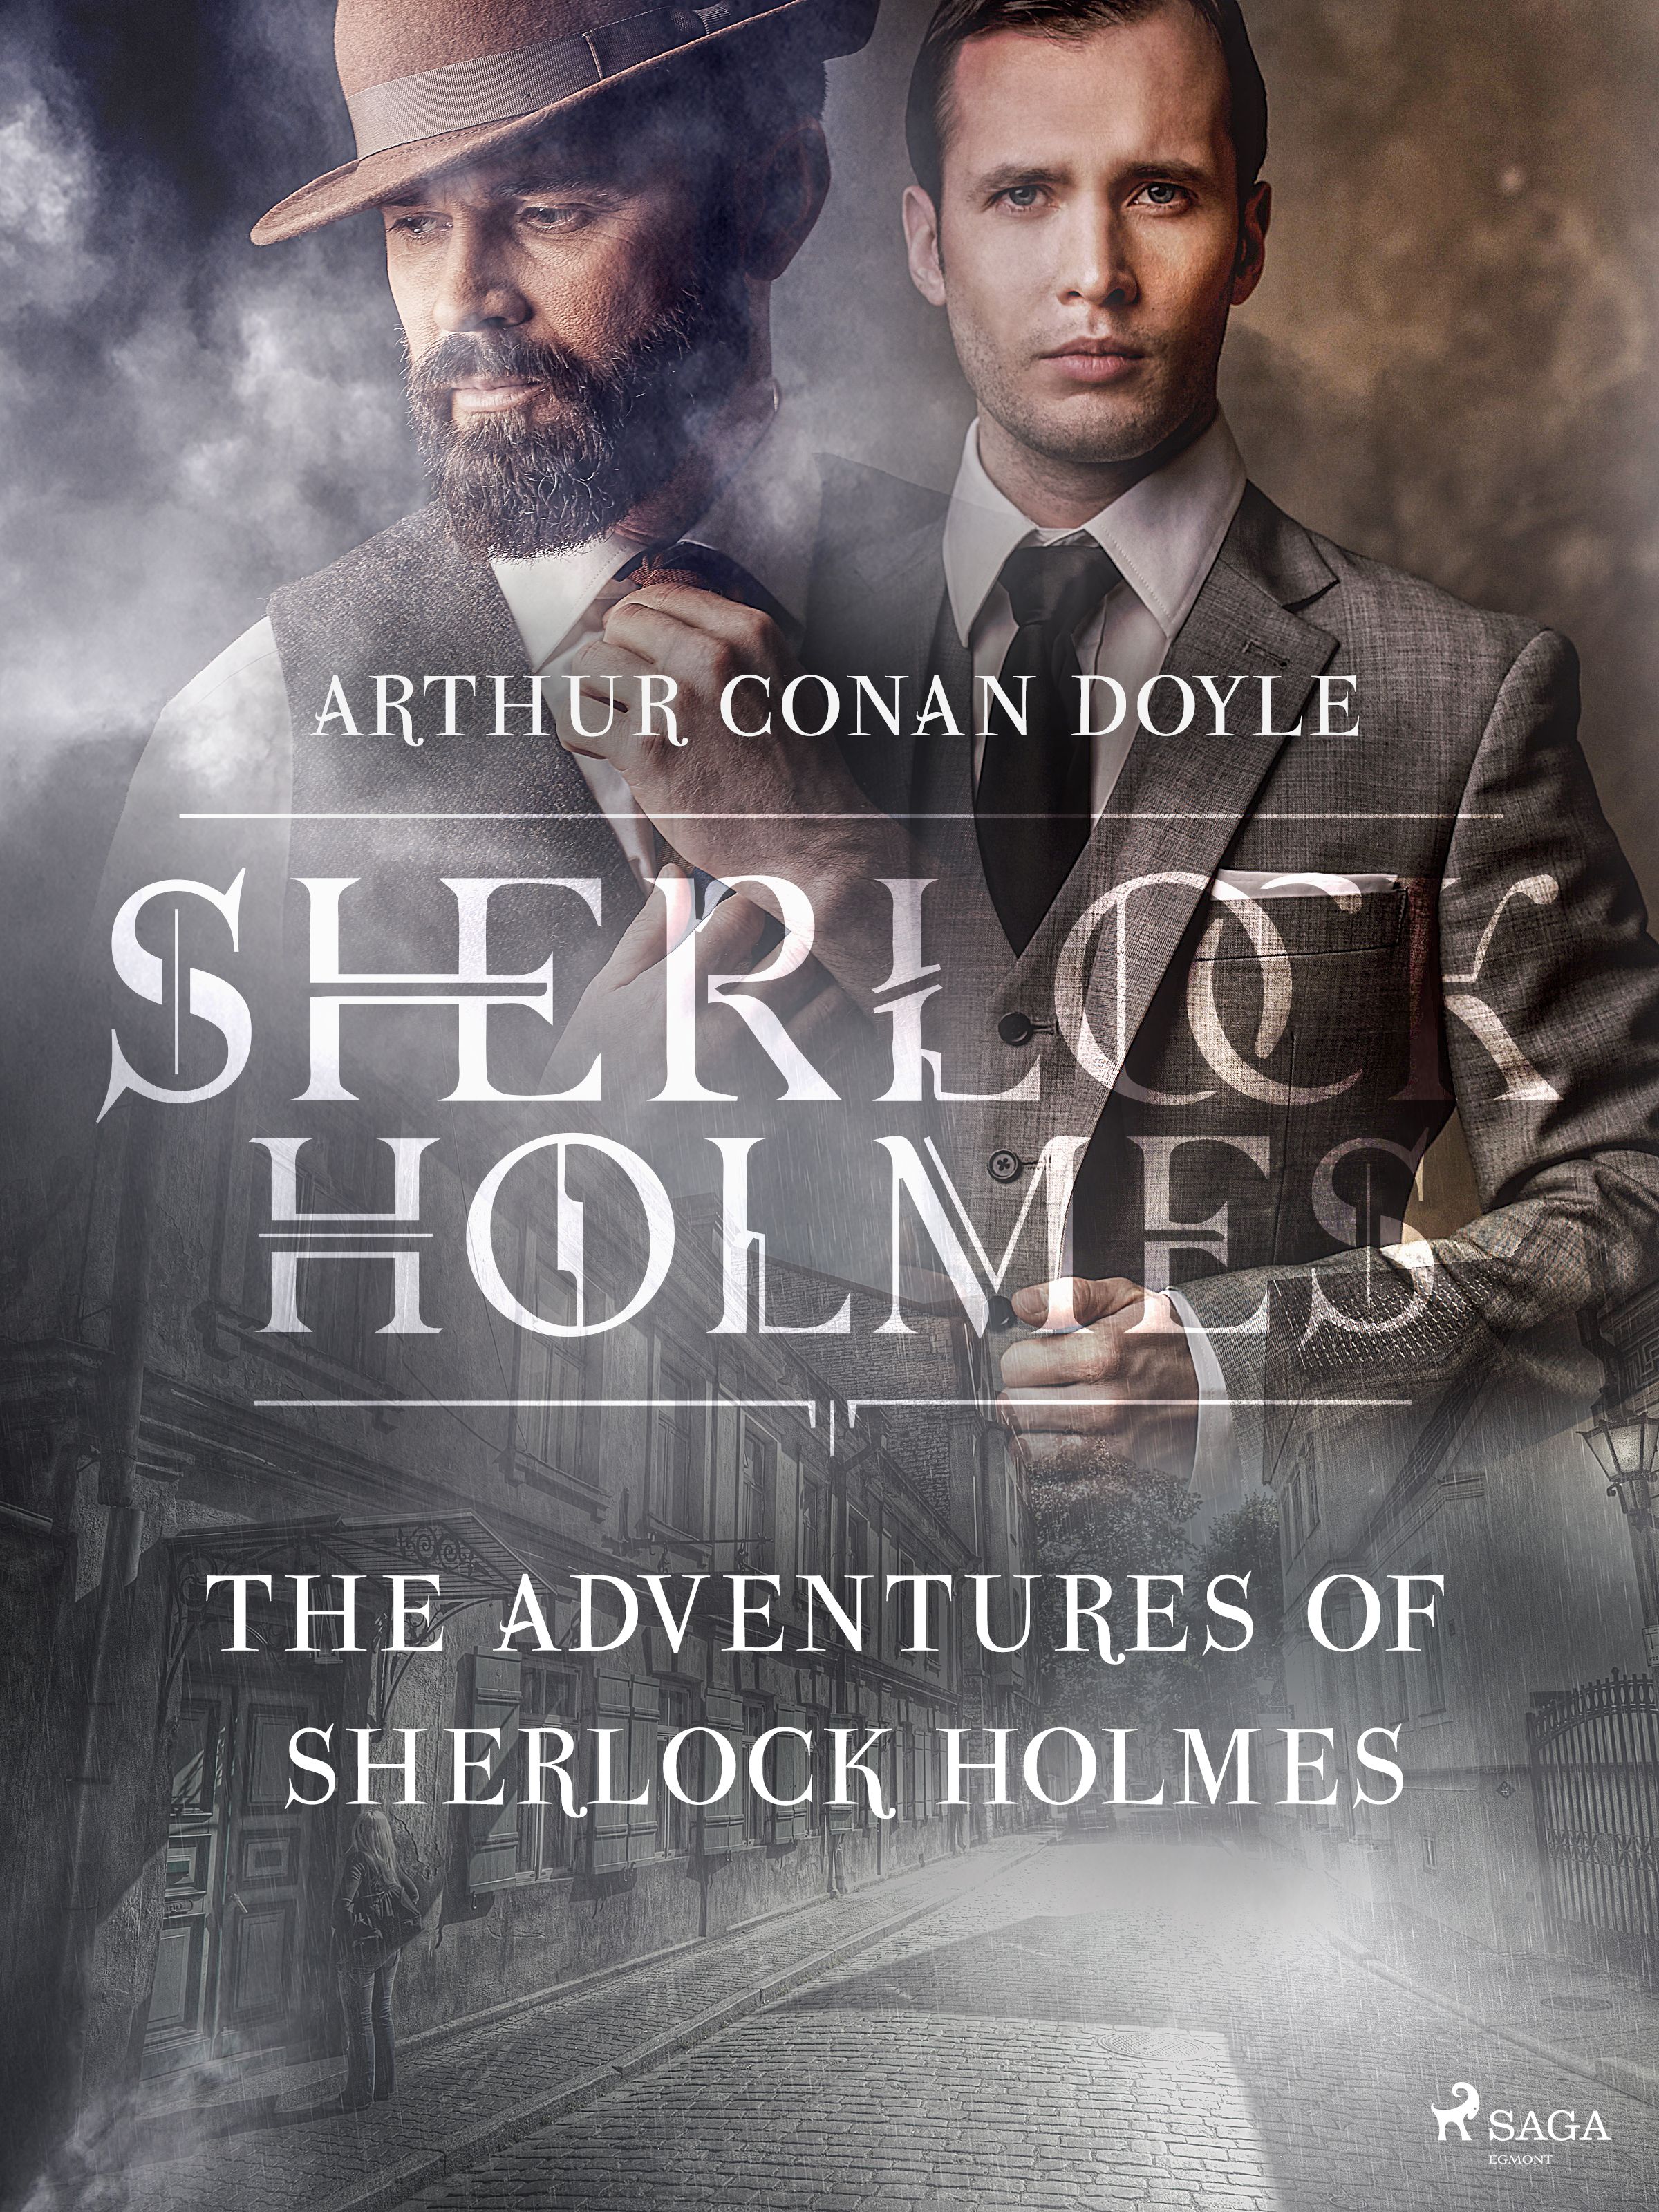 The Adventures of Sherlock Holmes, e-bog af Sir Arthur Conan Doyle